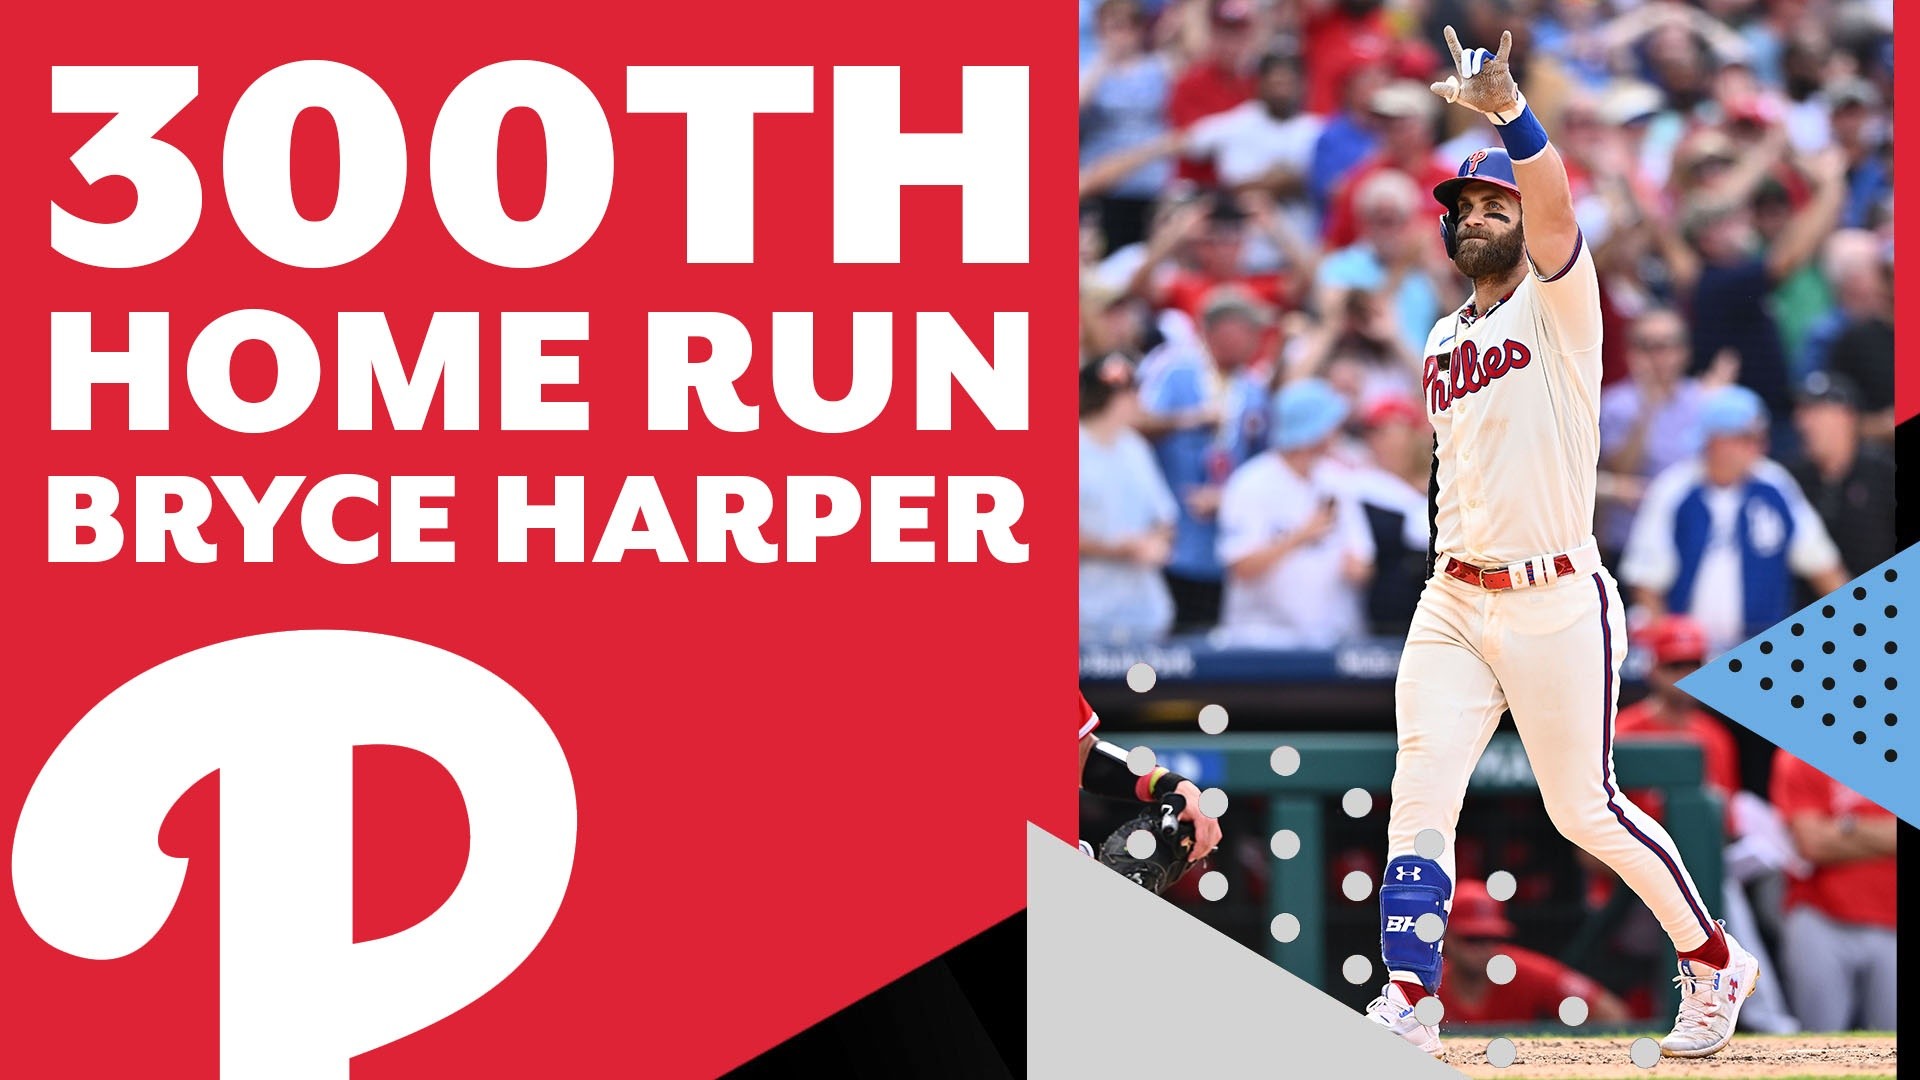 Bryce Harper hits 300th career home run